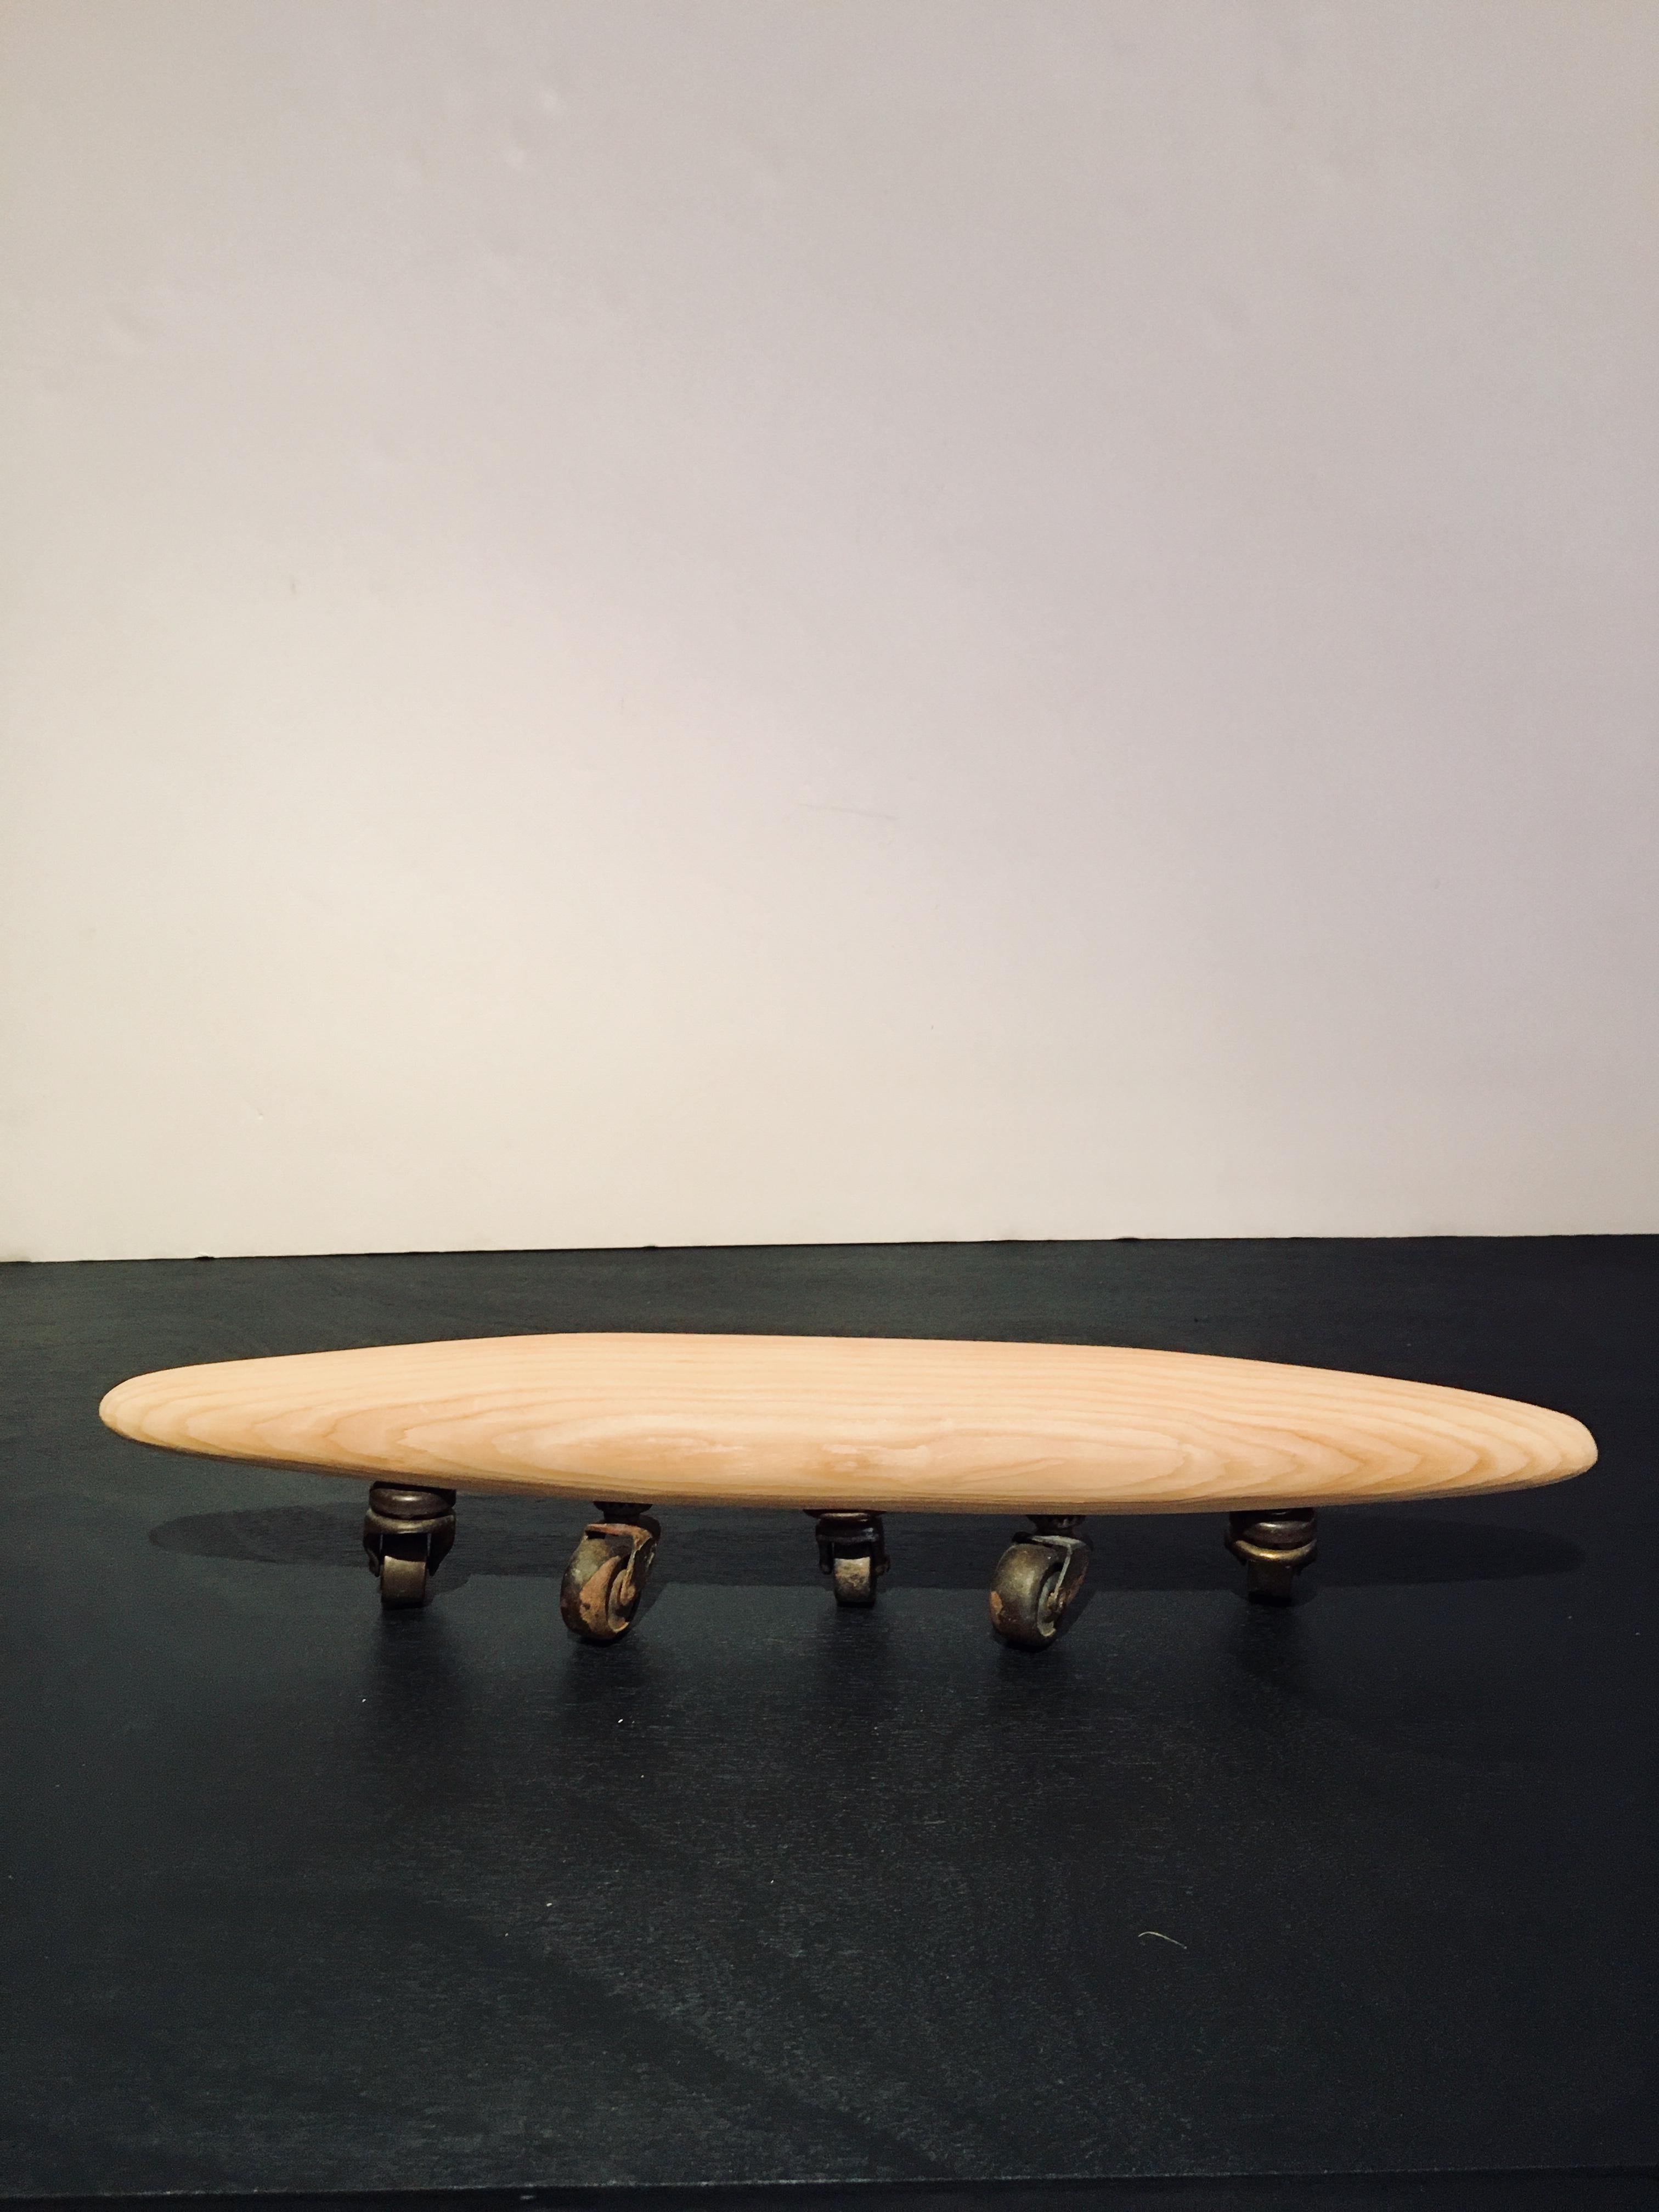 abstract fingerboard wheels